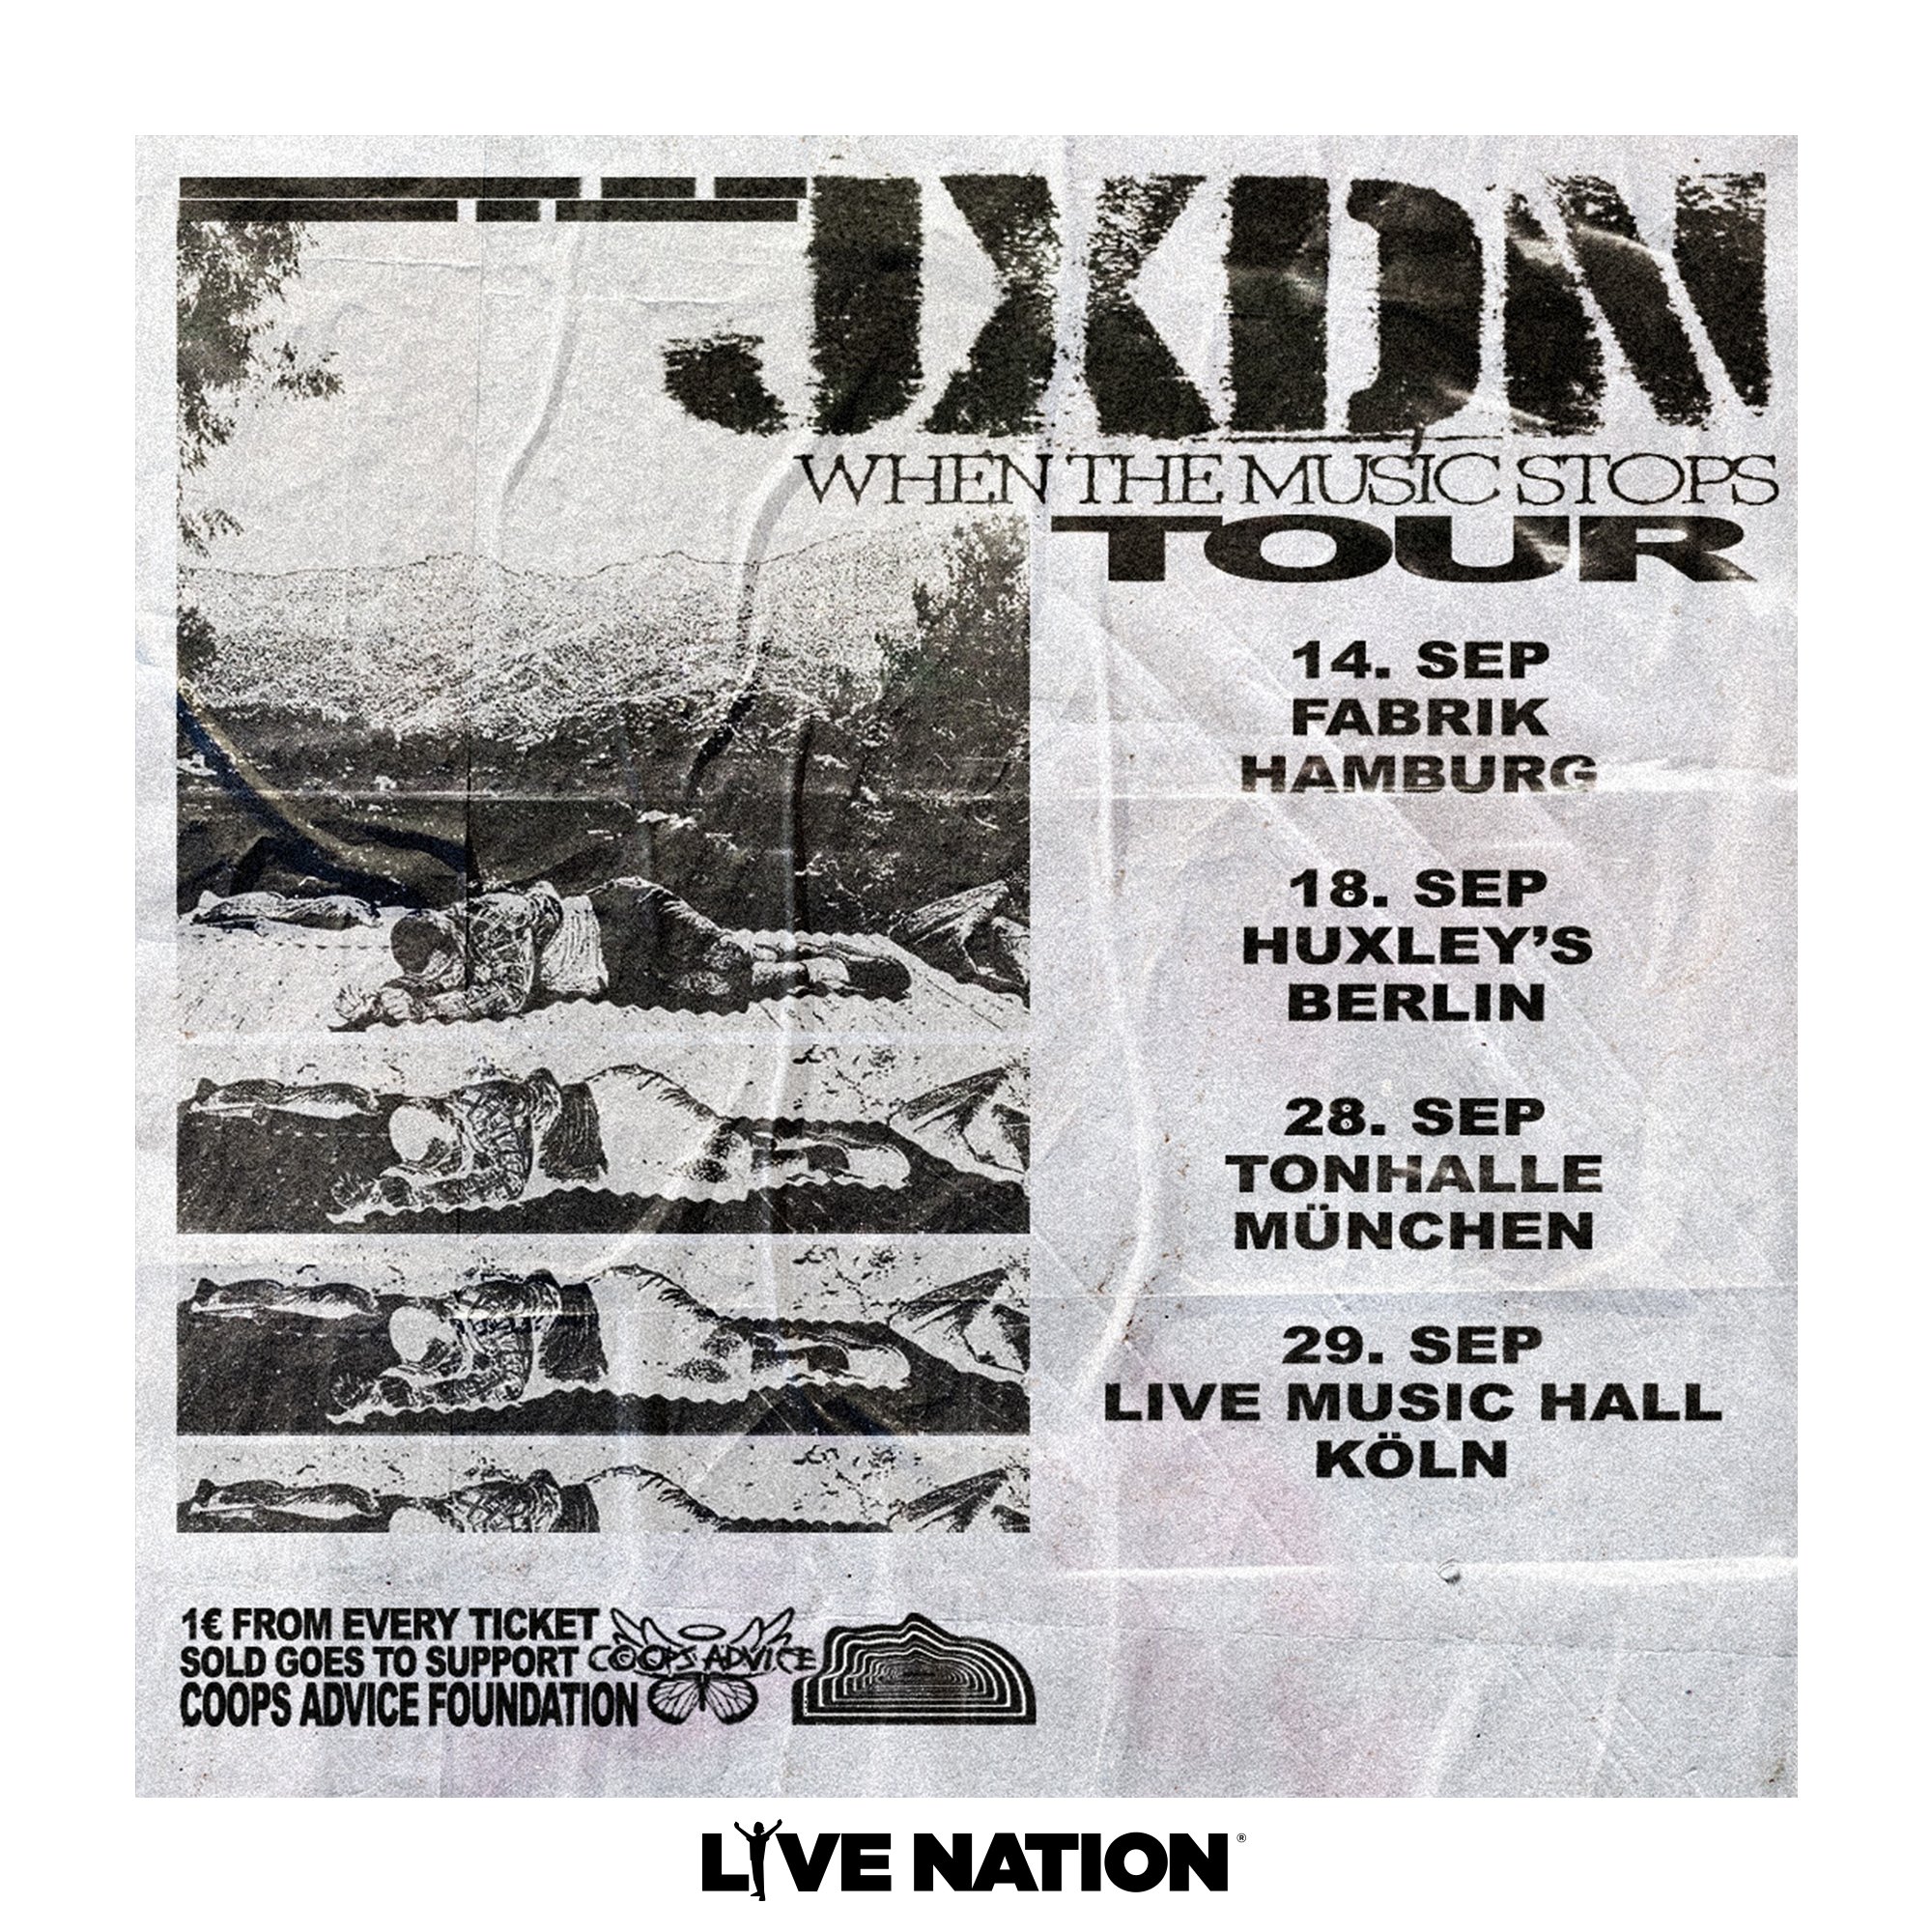 Jxdn - When The Music Stops Tour al Fabrik Hamburg Tickets